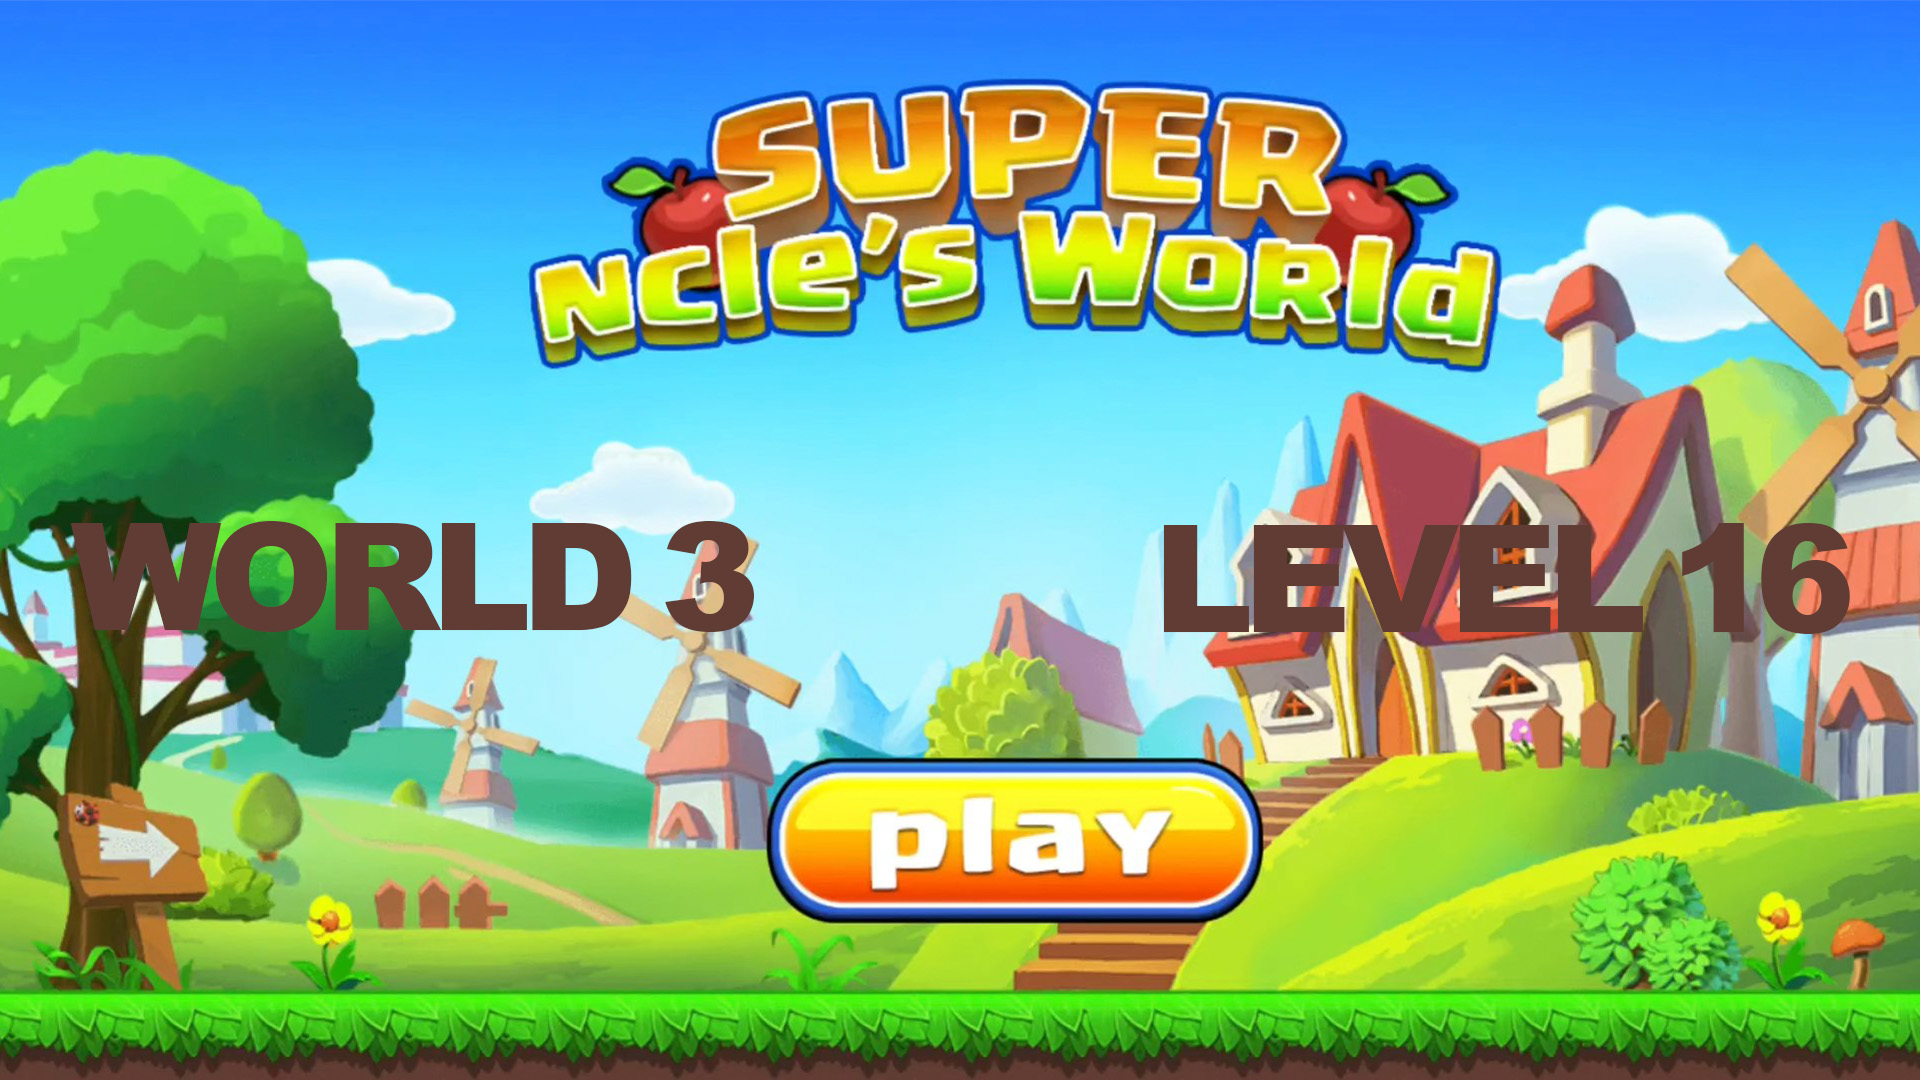 Super ncle's  World 3. Level 16.